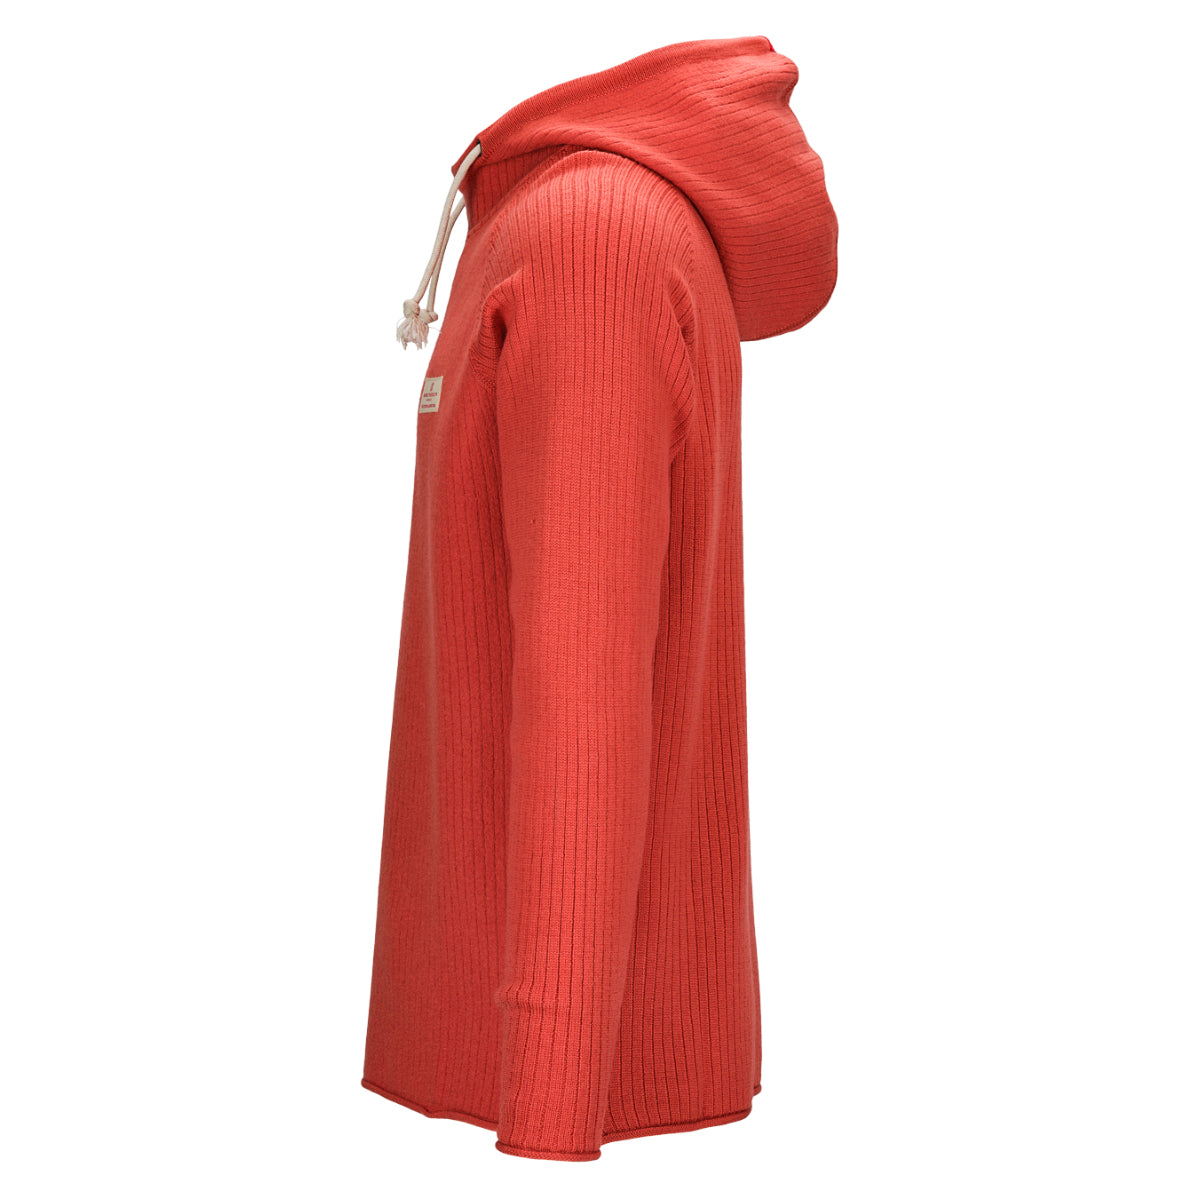 Amundsen Sports - Men's Boiled Hoodie - Weathered Red